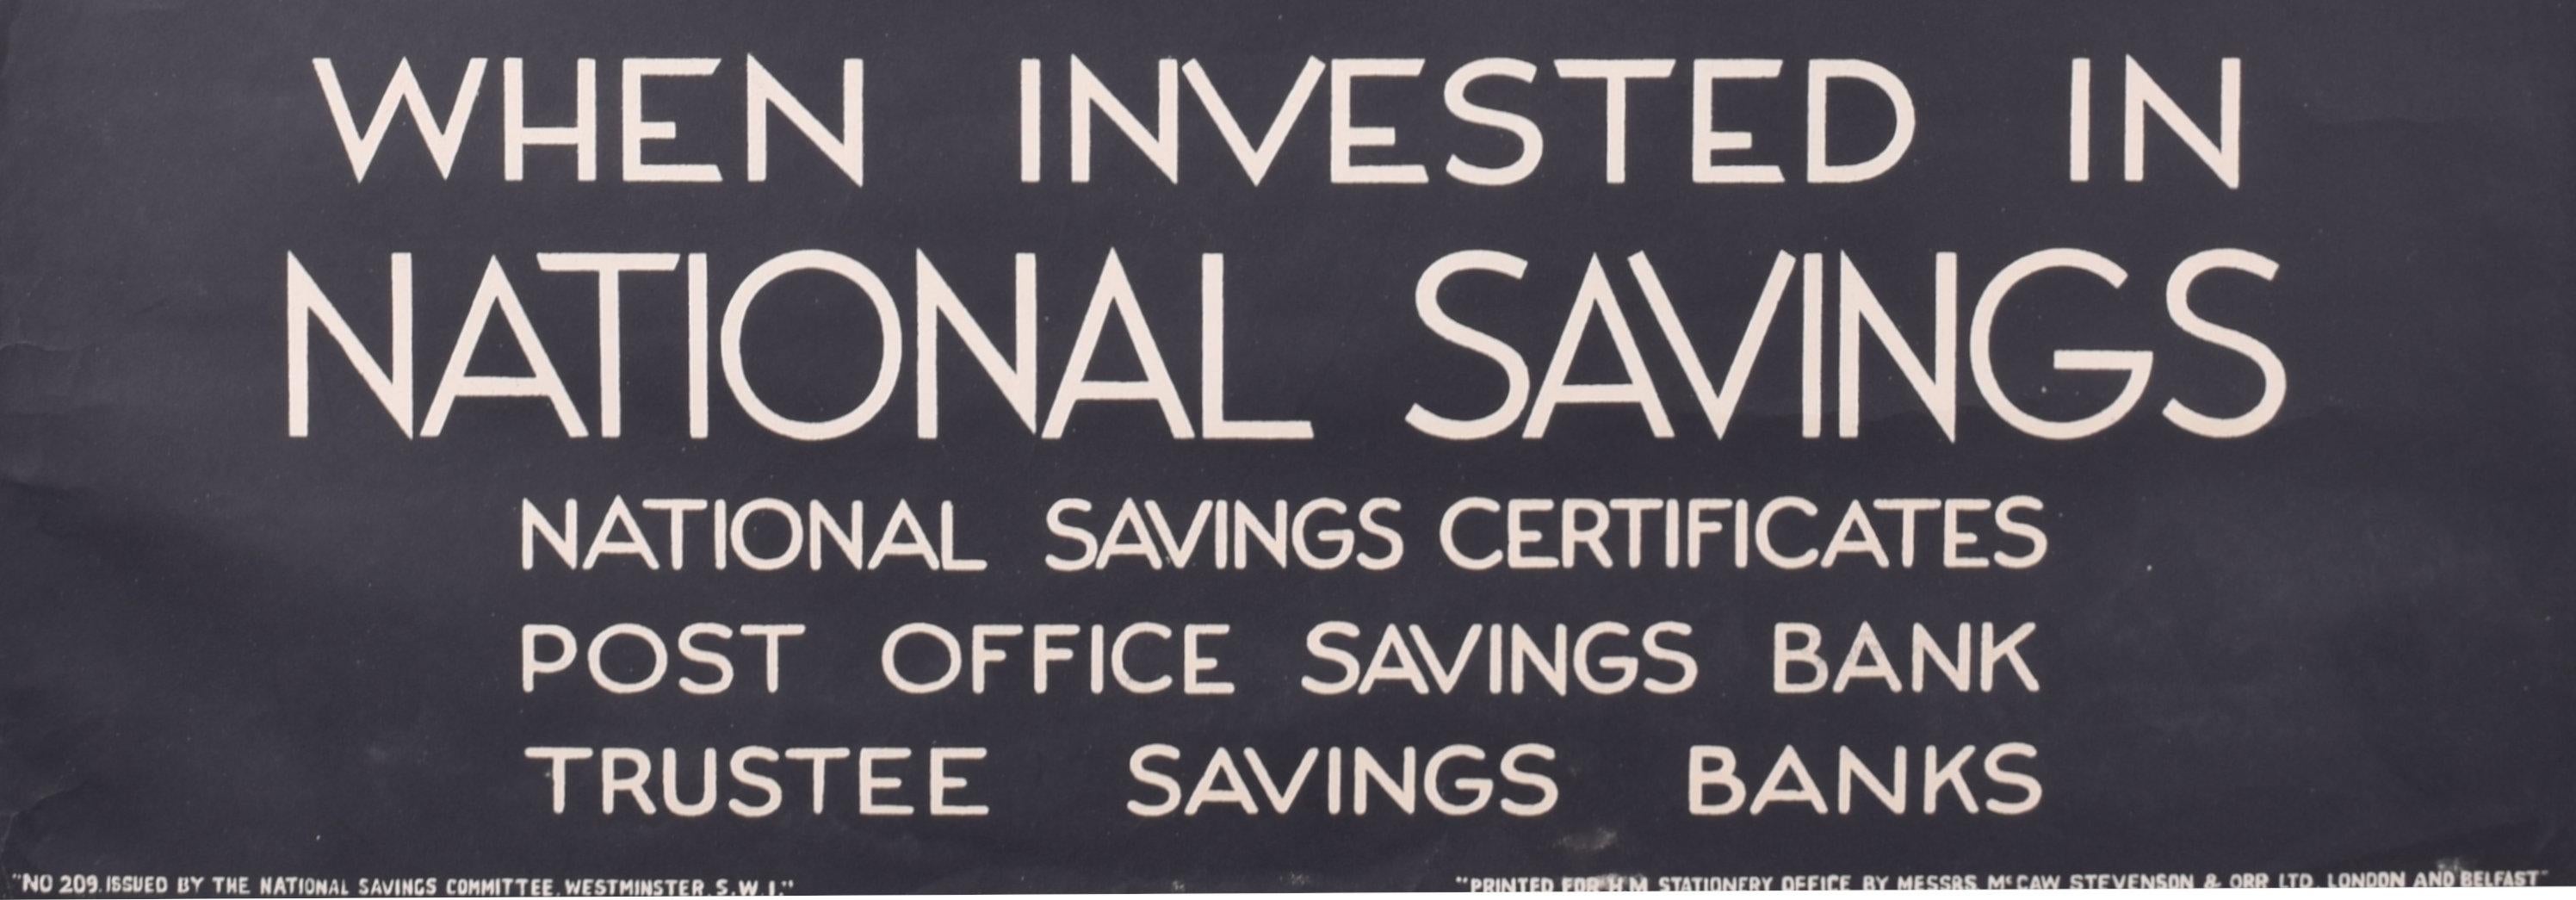 National Savings biplane original vintage 1930s poster - Modern Print by Unknown